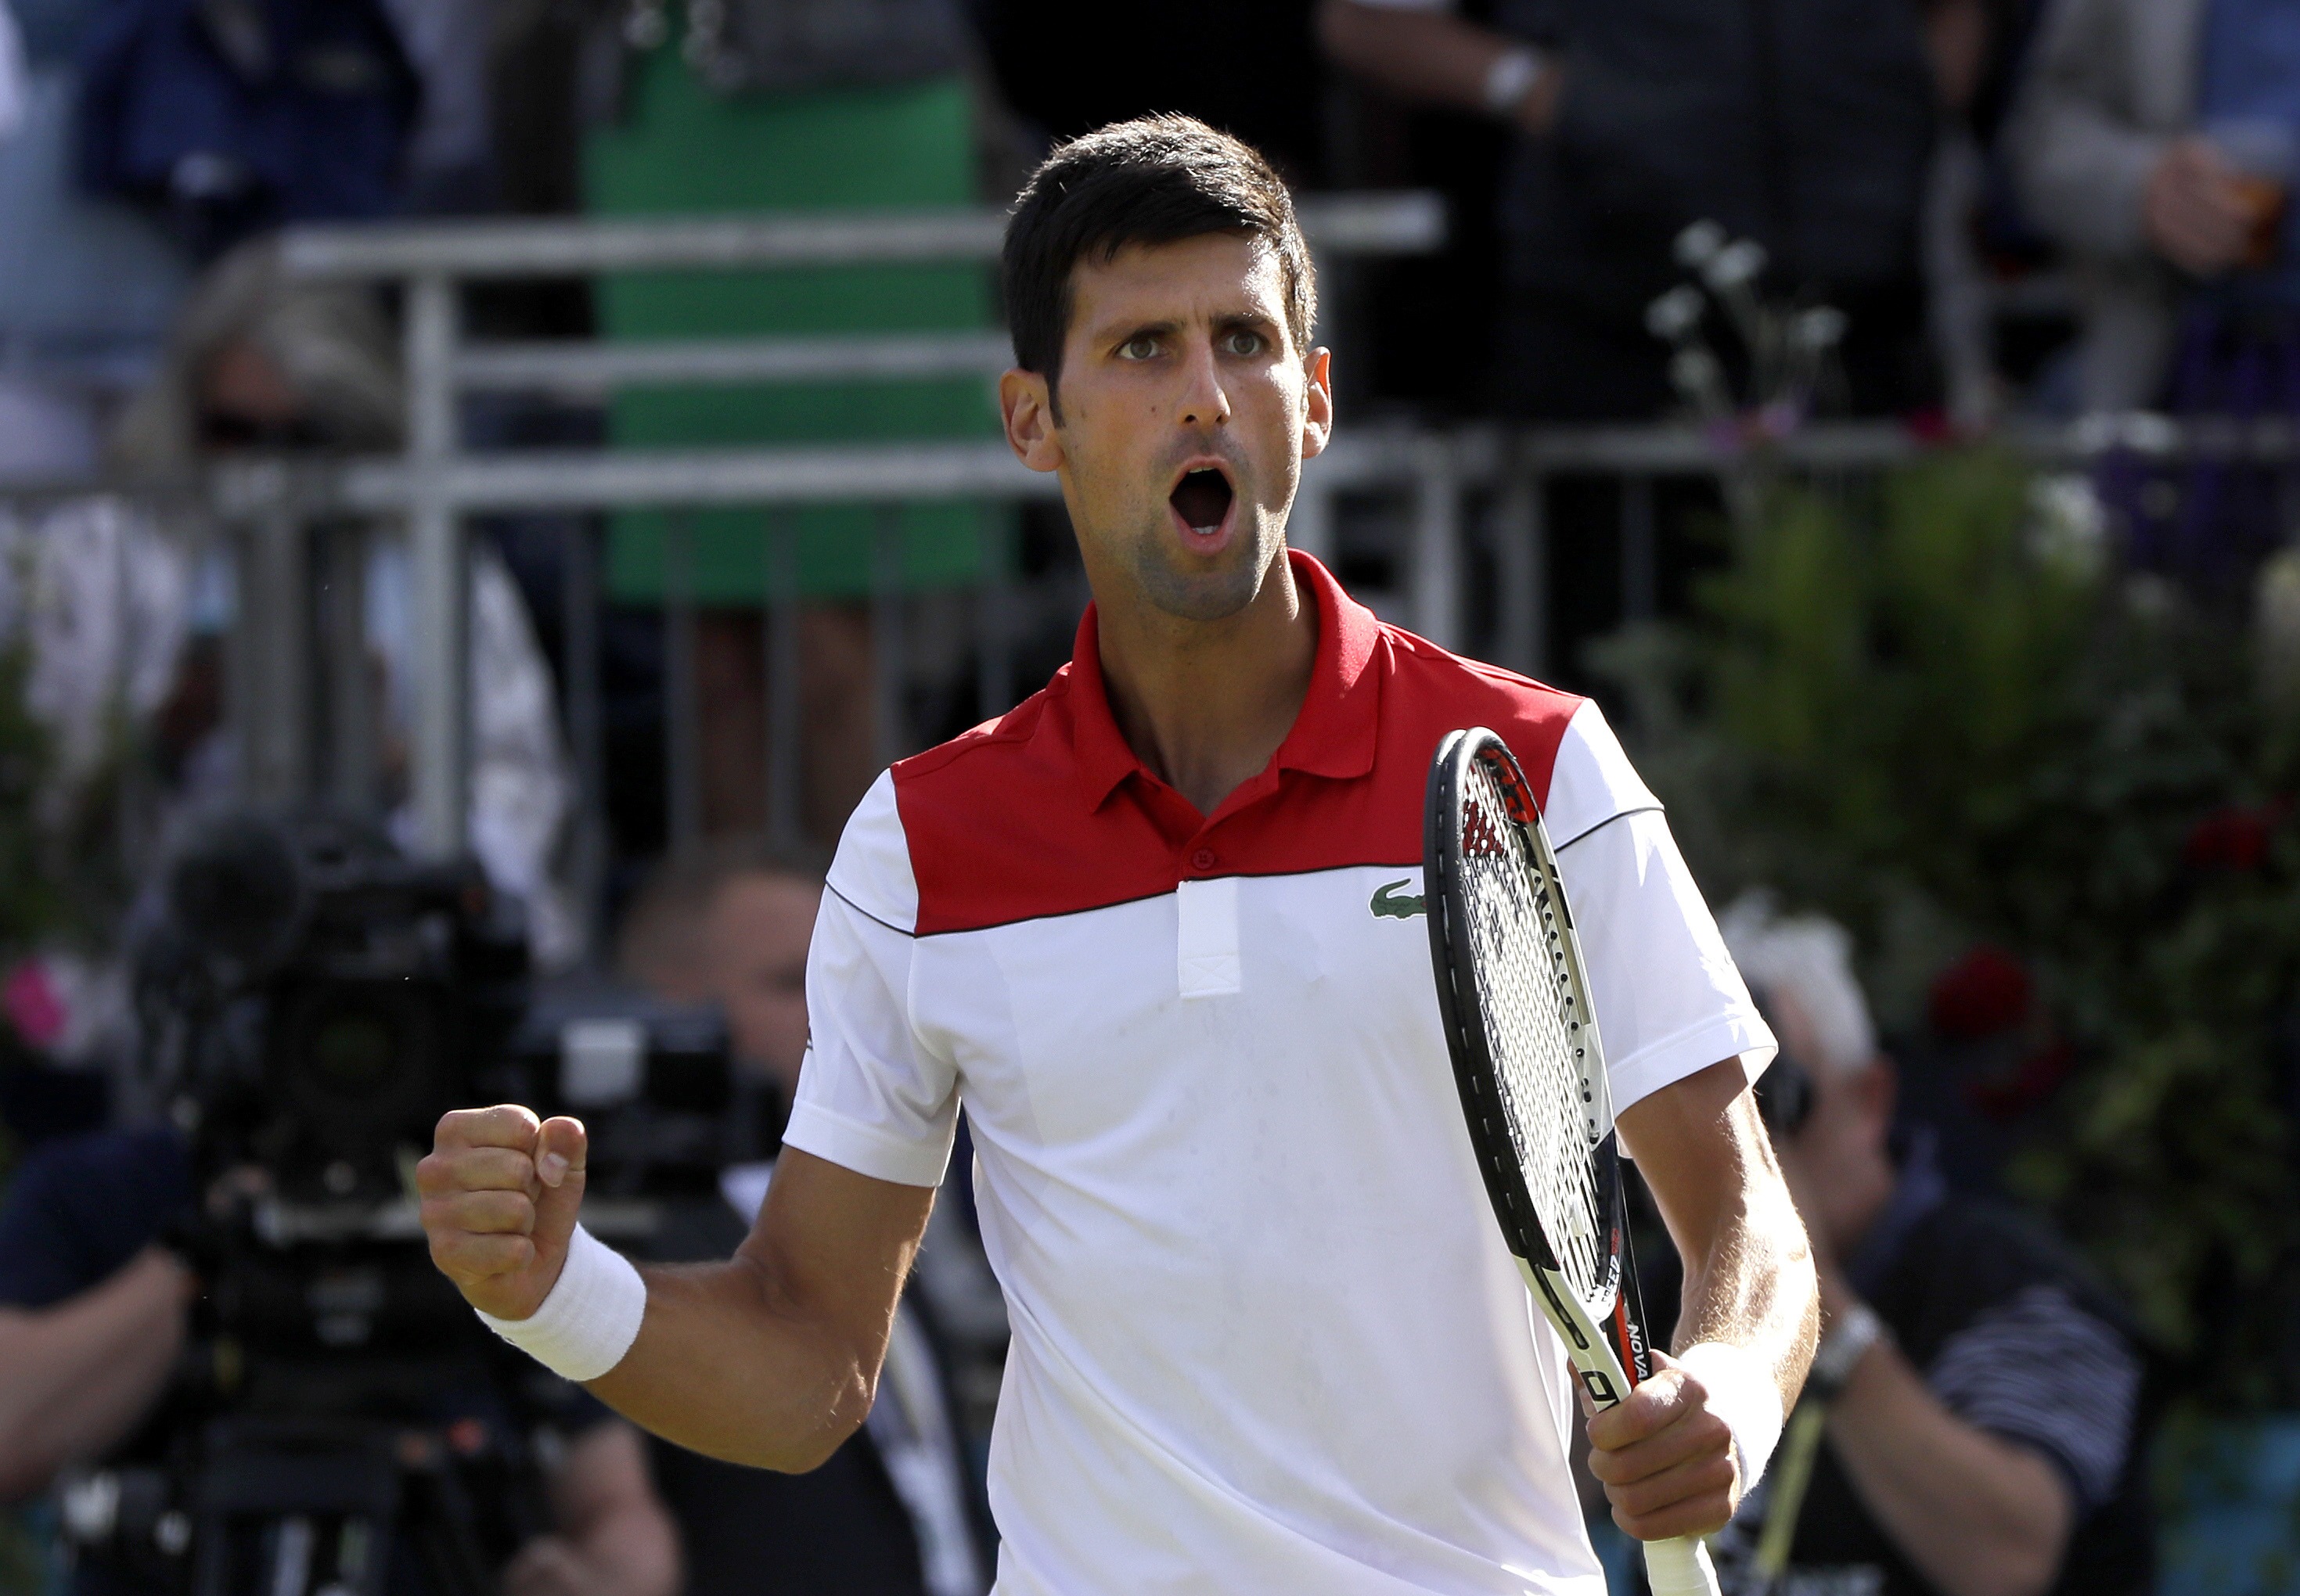 With win over Dimitrov, Djokovic cruises into quarterfinals in Queen's